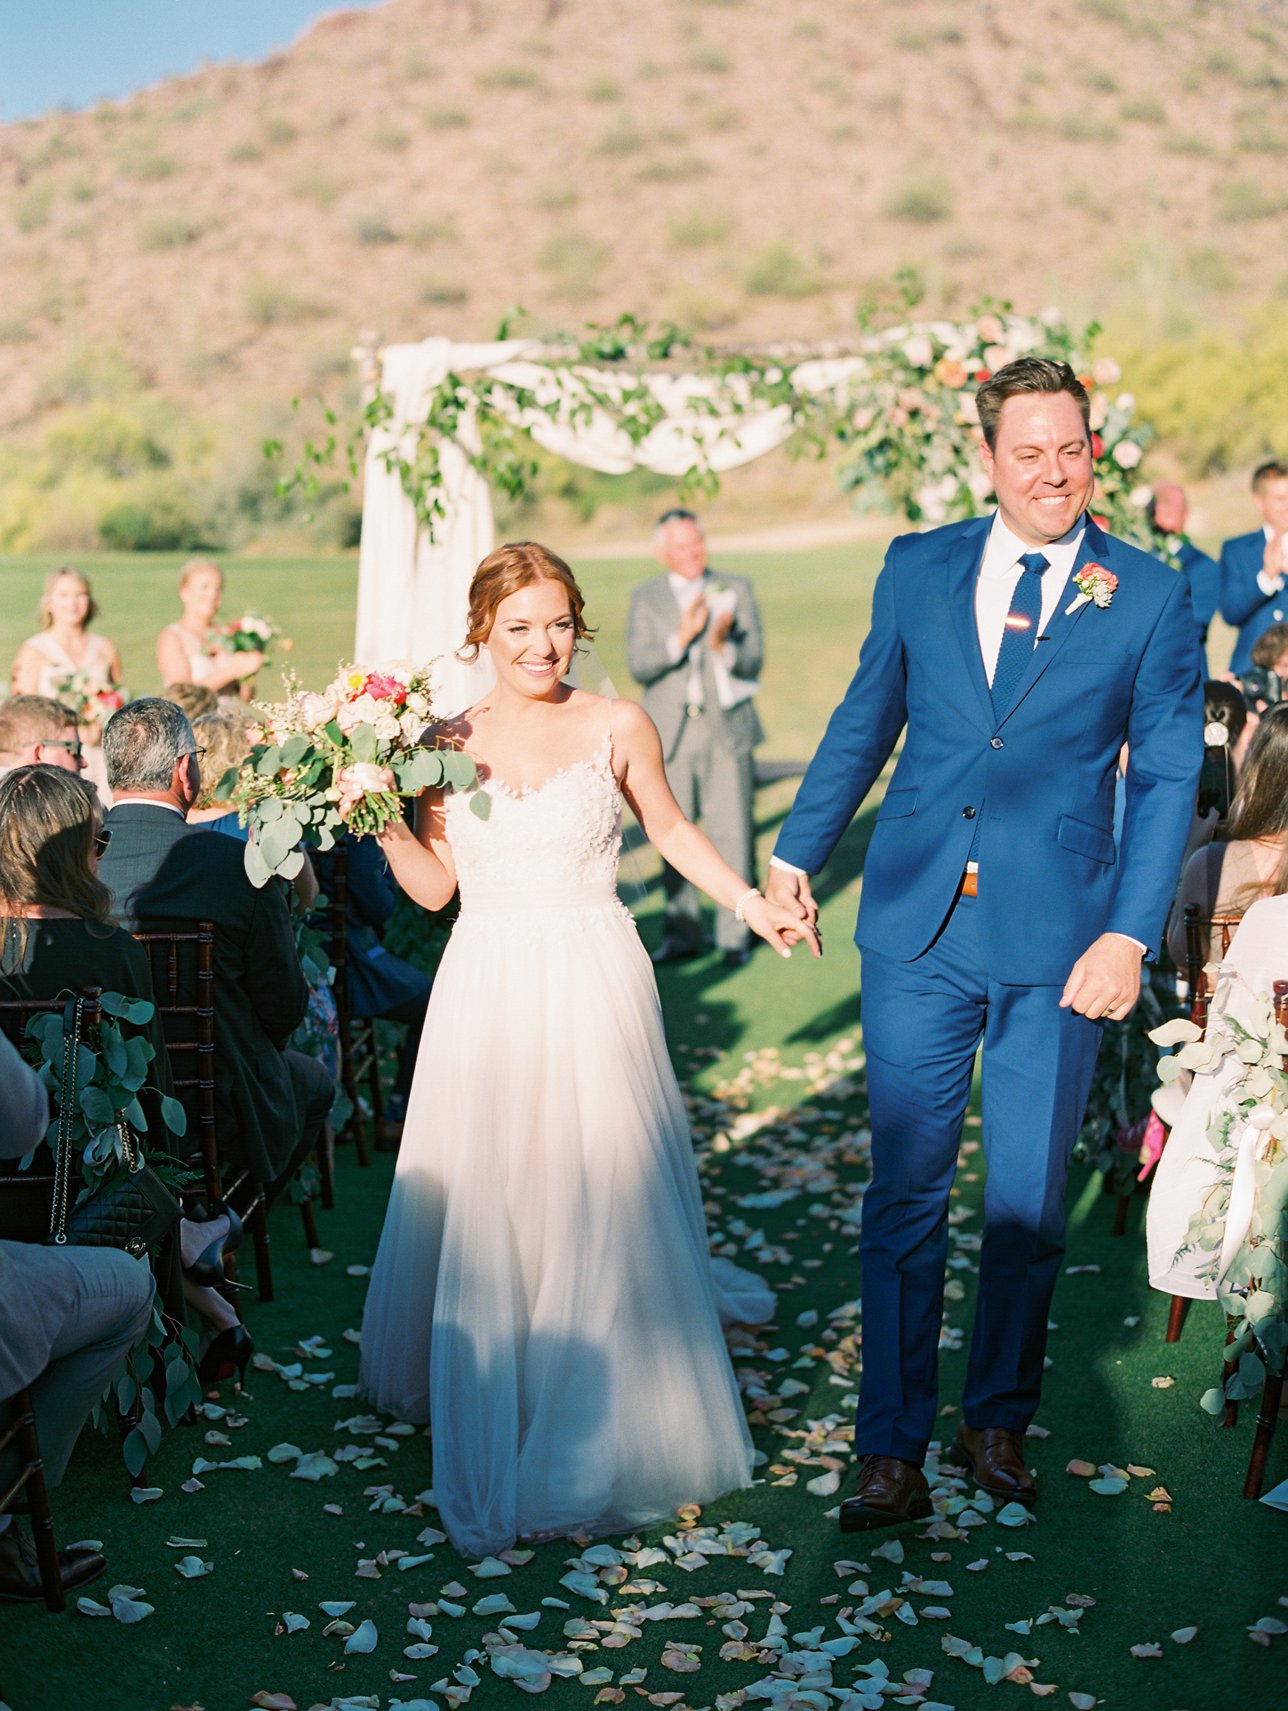 Silverleaf wedding photos - Scottsdale wedding photographer - Rachel Solomon Photography